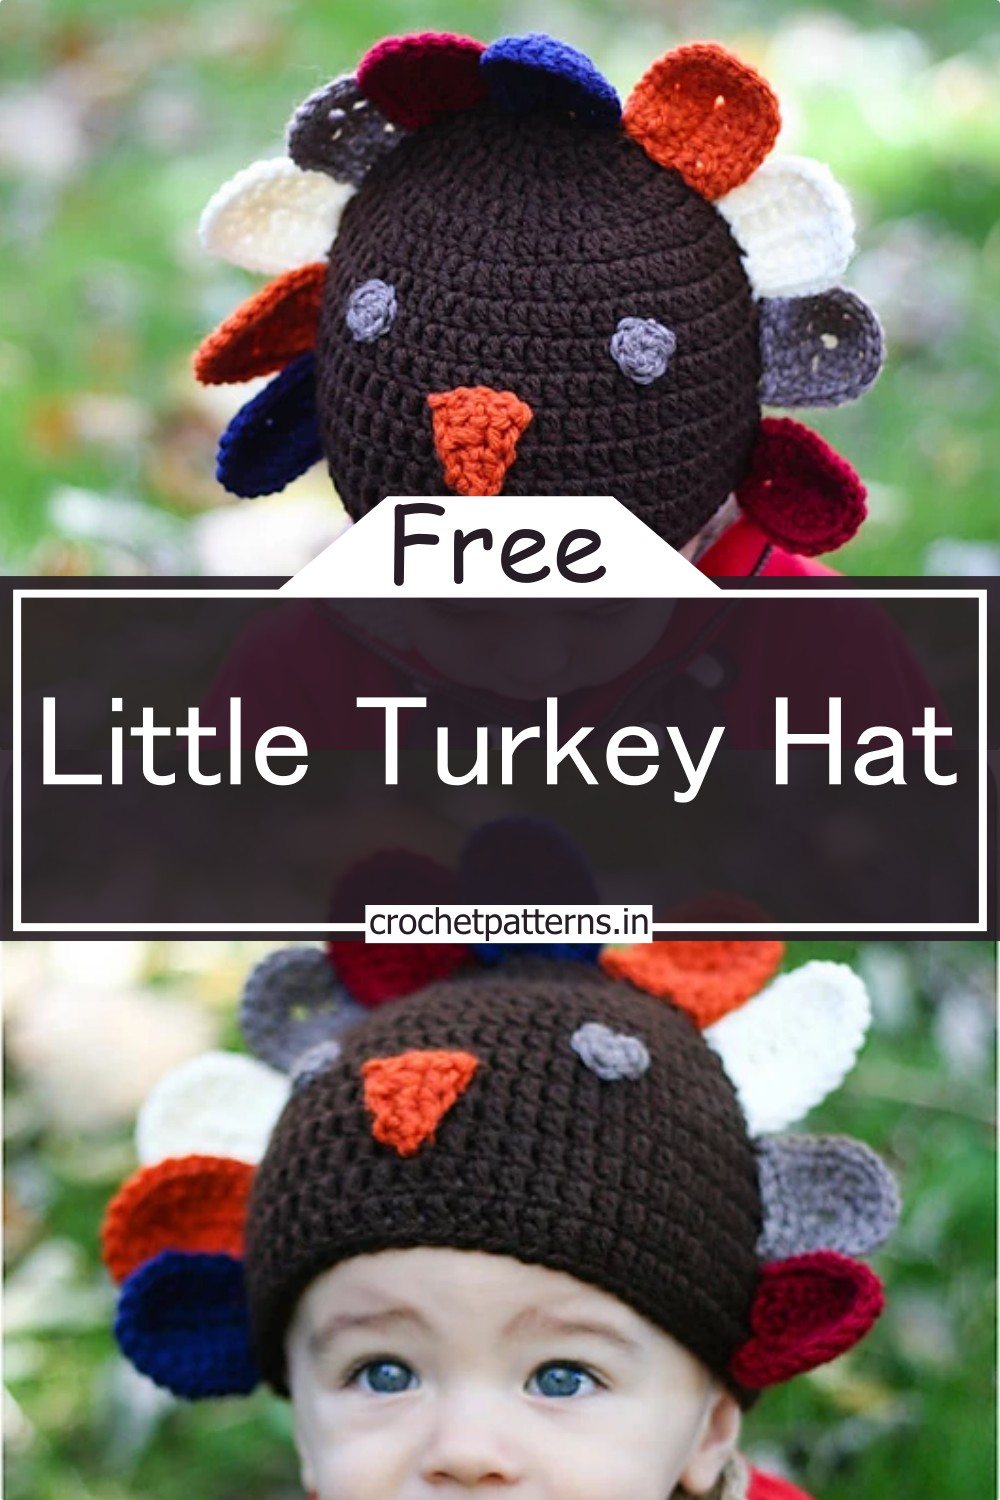 Little Turkey Hat